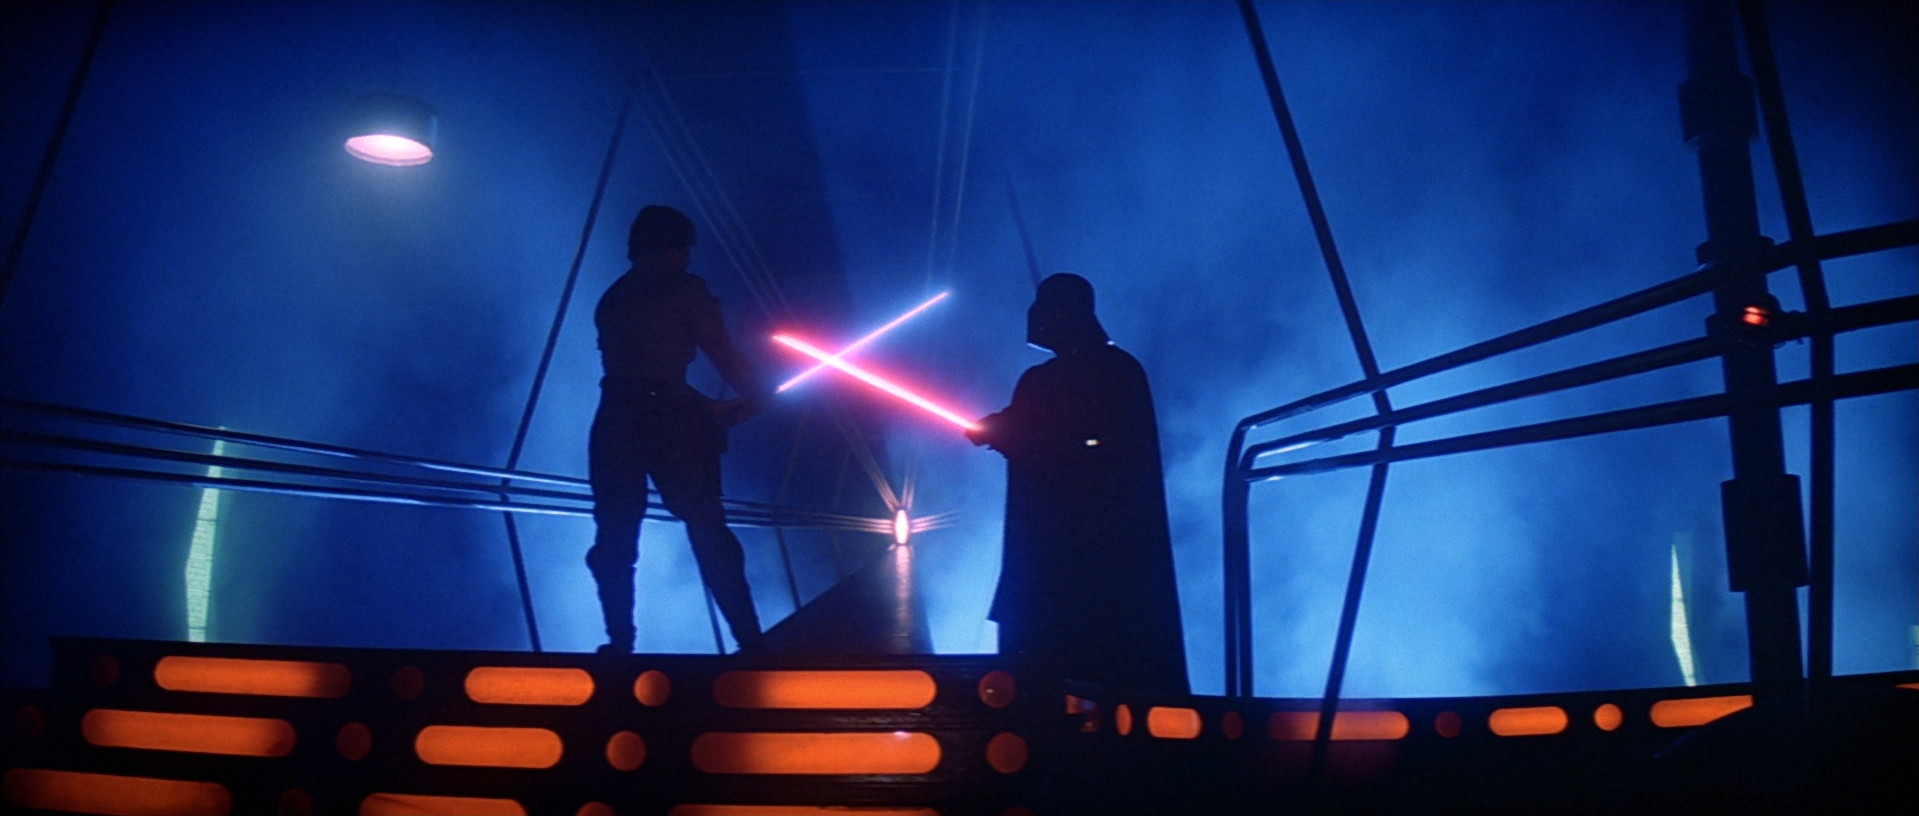 Star Wars Episode V: The Empire Strikes Back #20